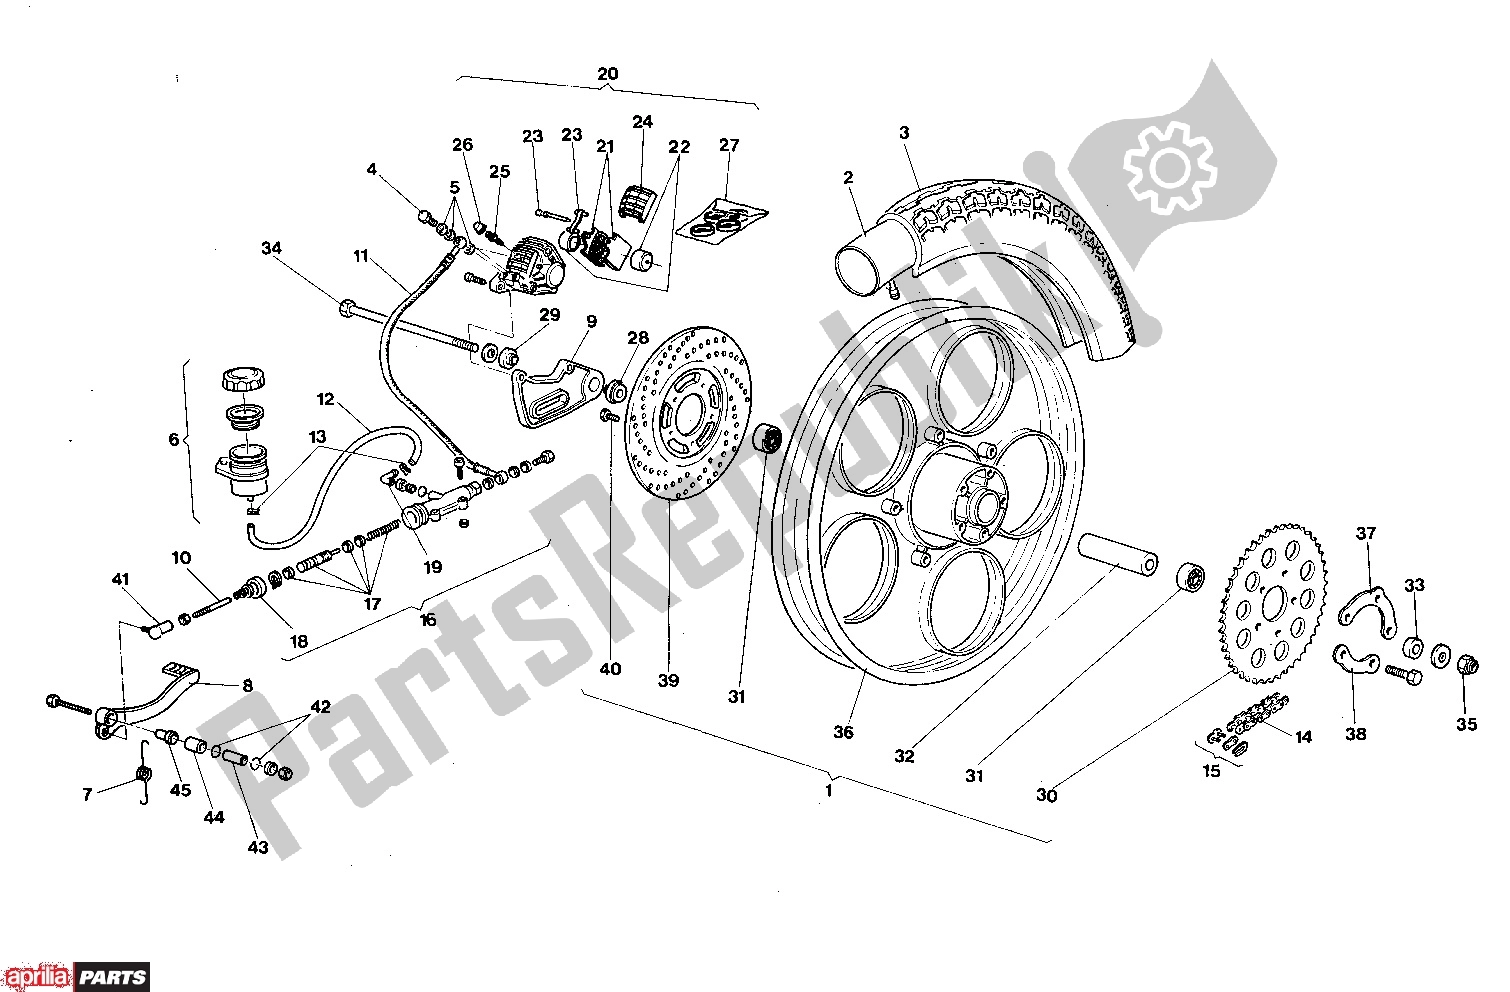 All parts for the Rear Wheel Disk Brake of the Aprilia AF1 303 50 1986 - 1988